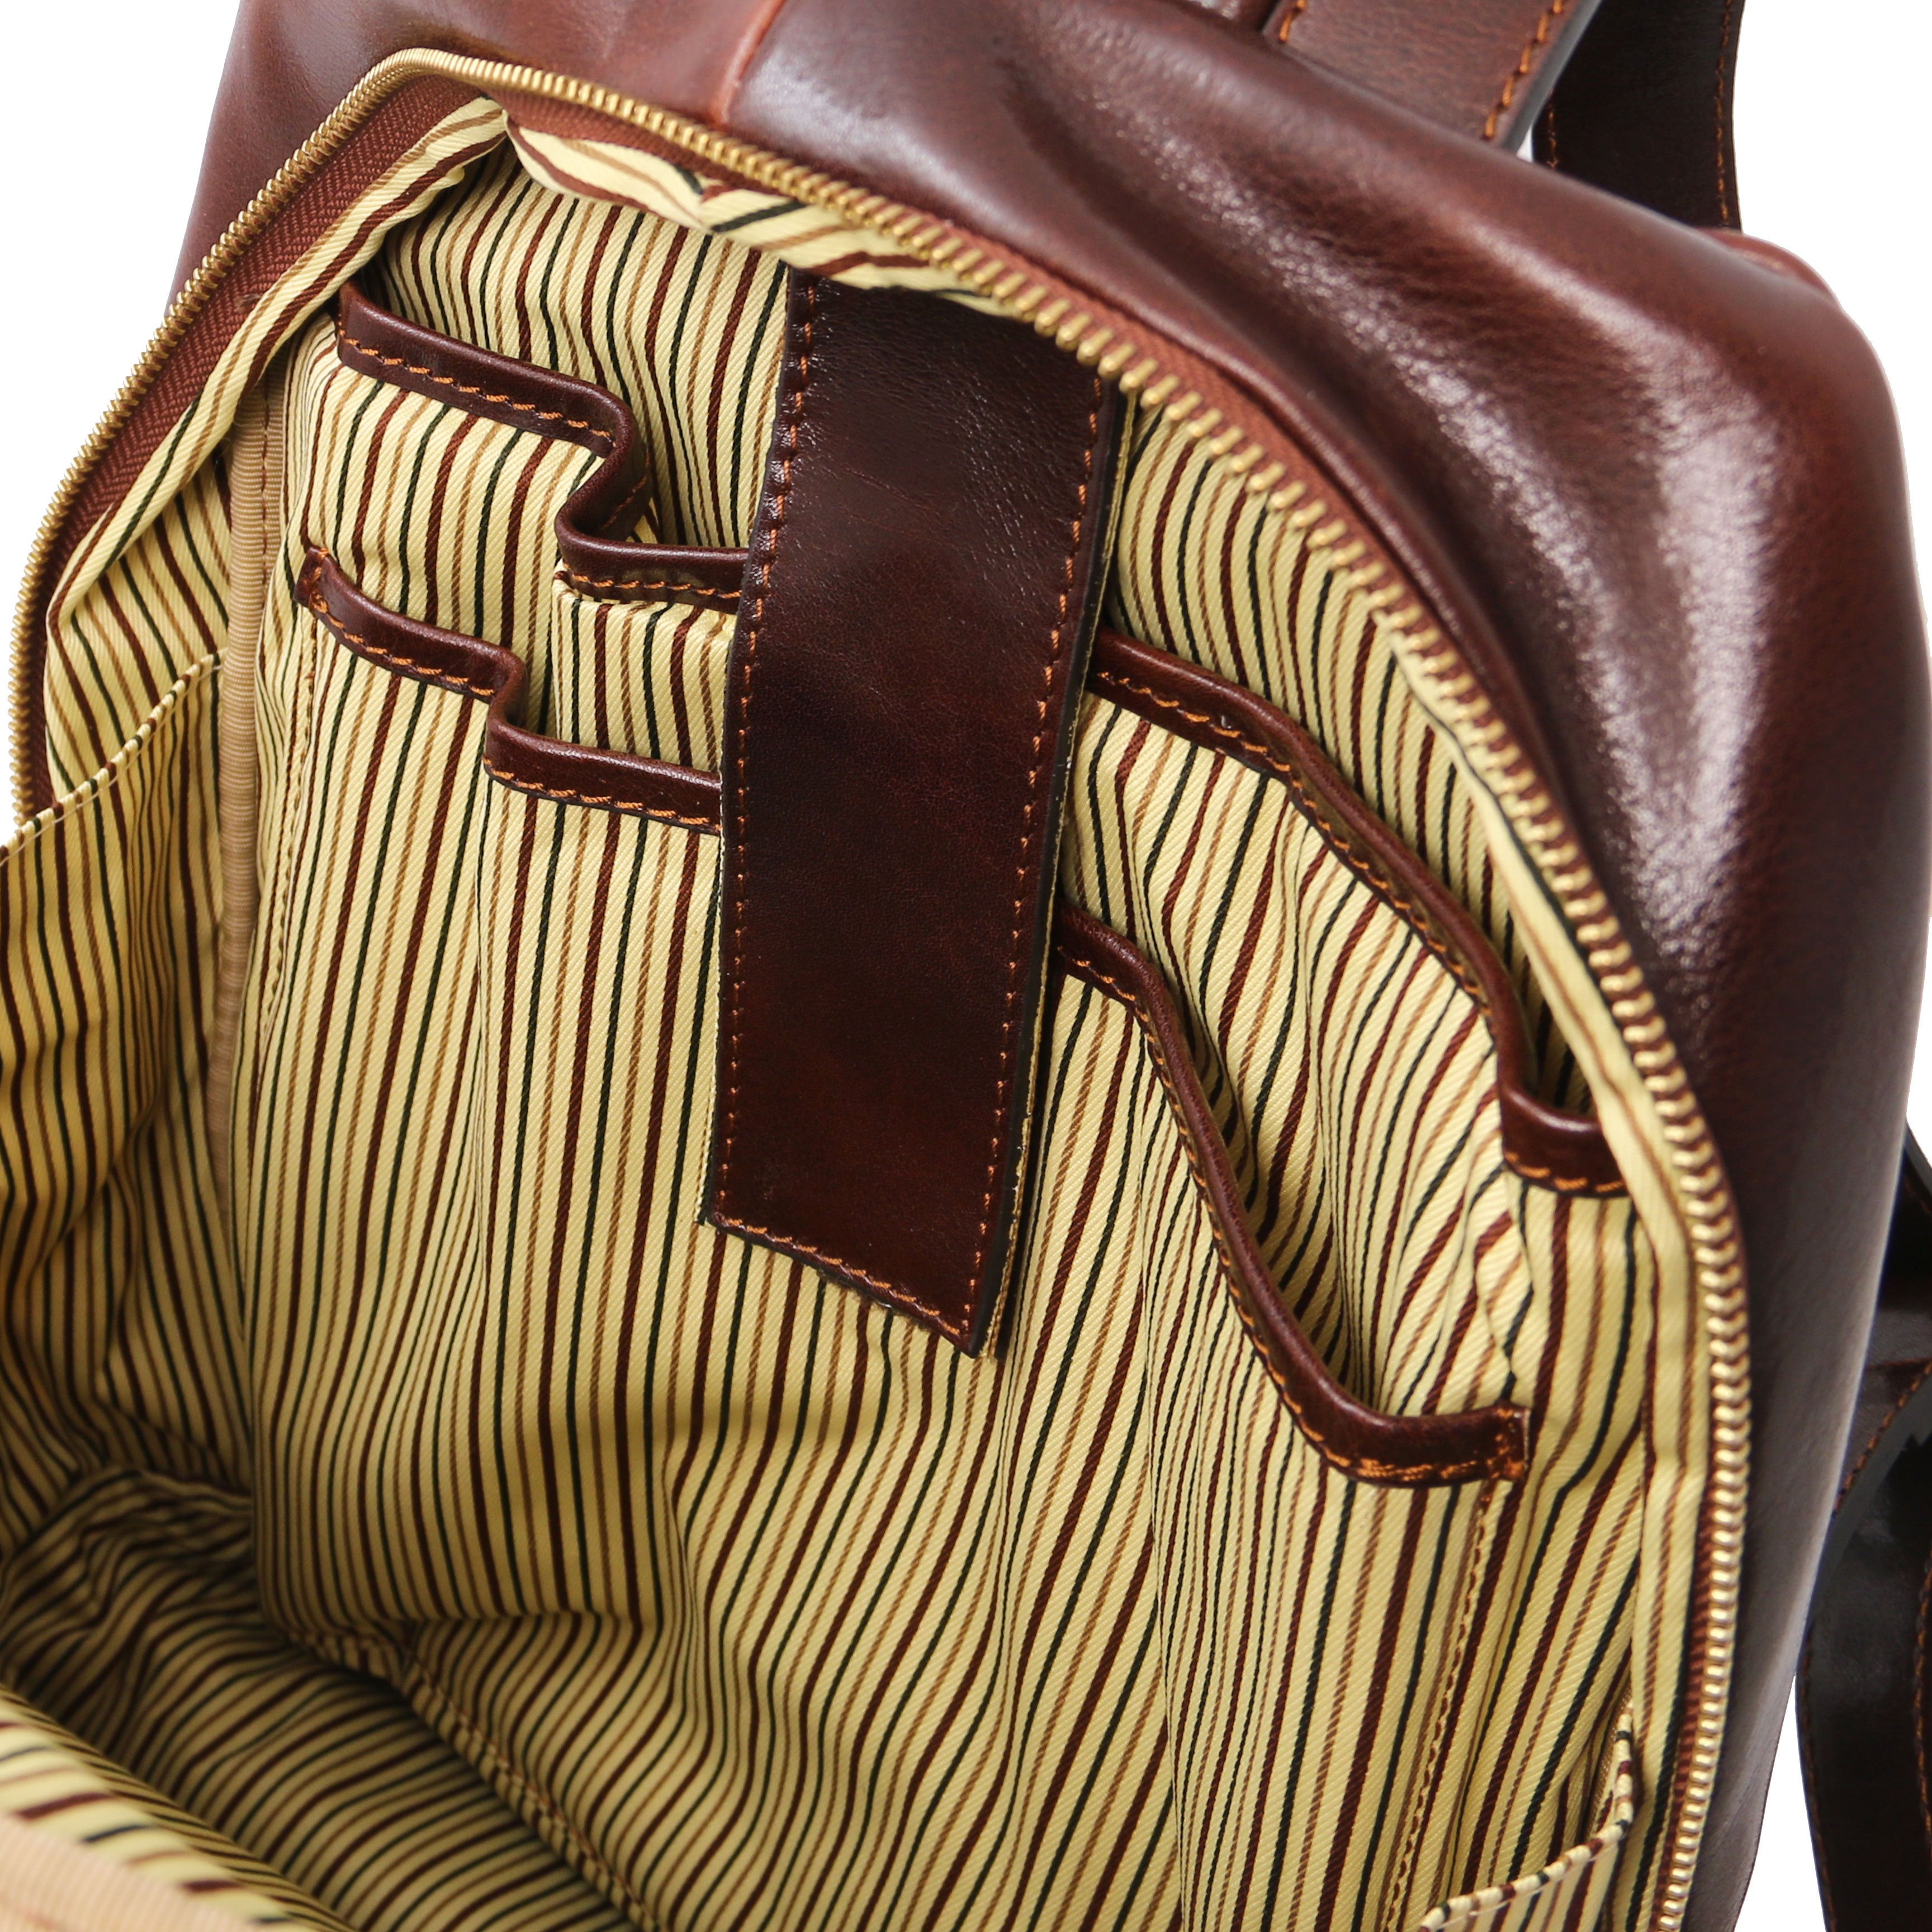 Tuscany Leather rugtas Perth 2 Compartments bruin binnenkant